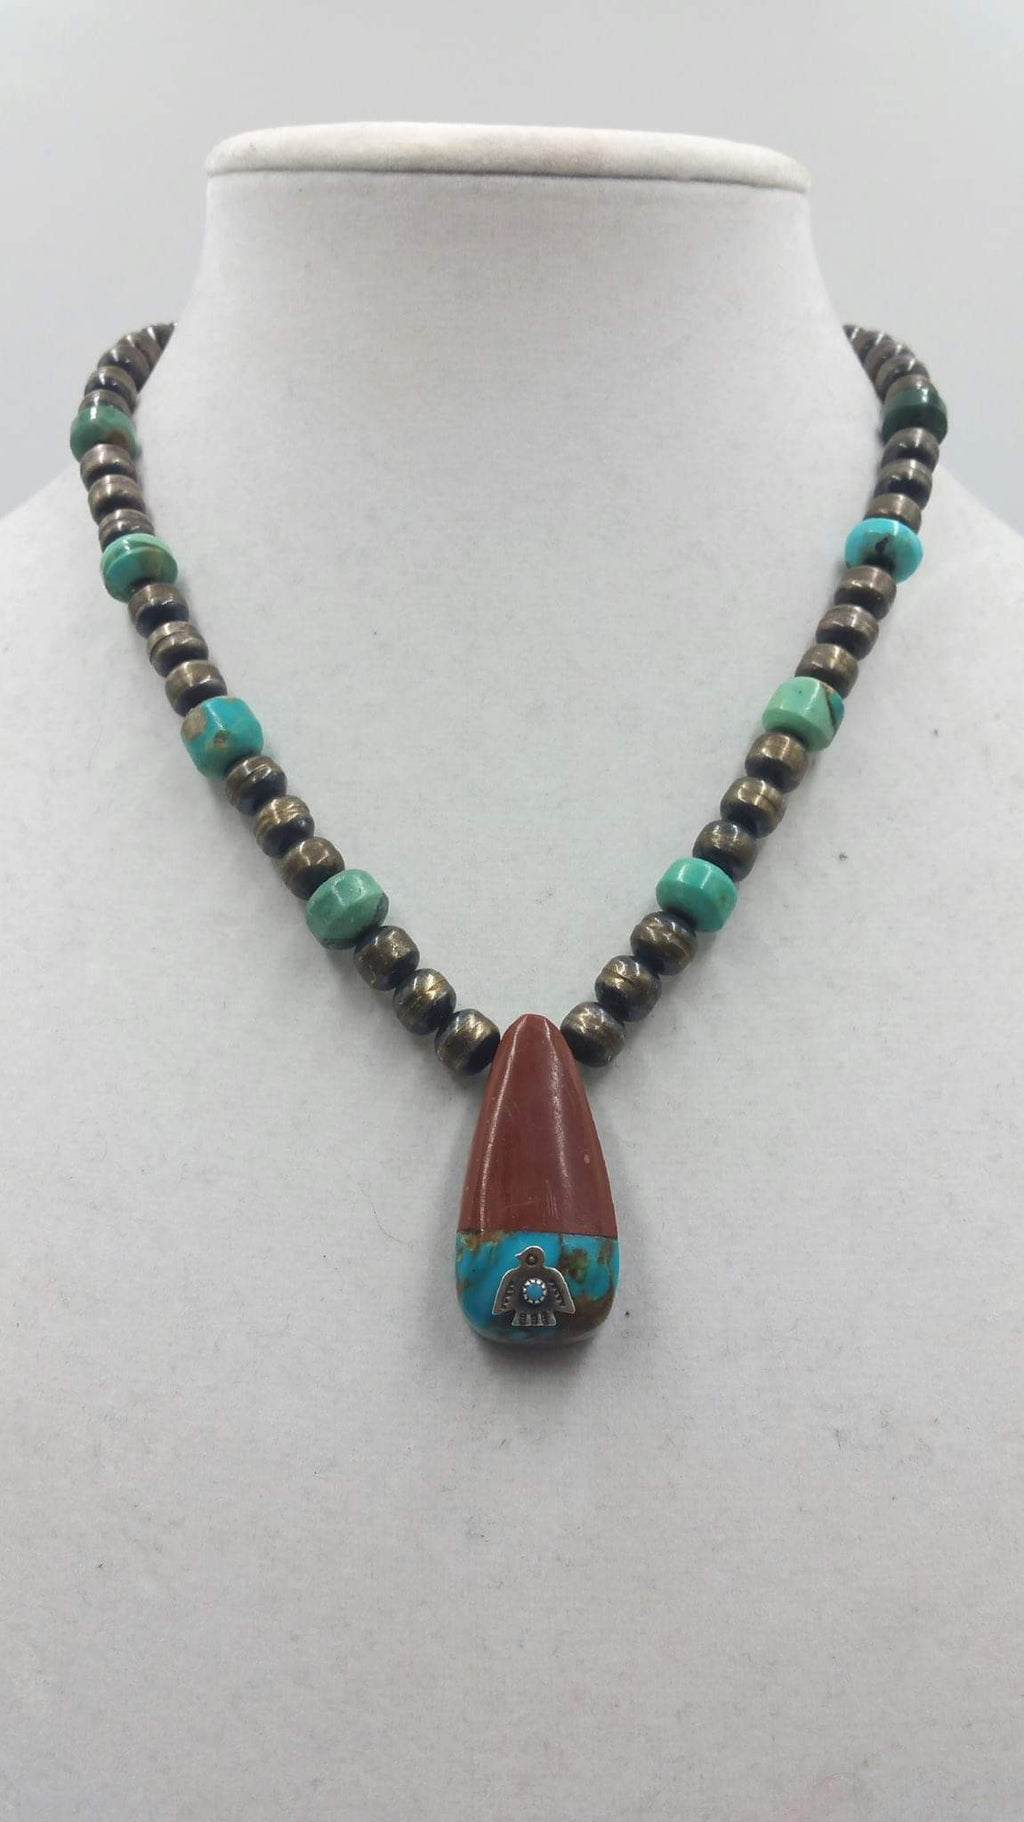 Vegan. Vintage, sterling, turquoise, pipestone pendant necklace.